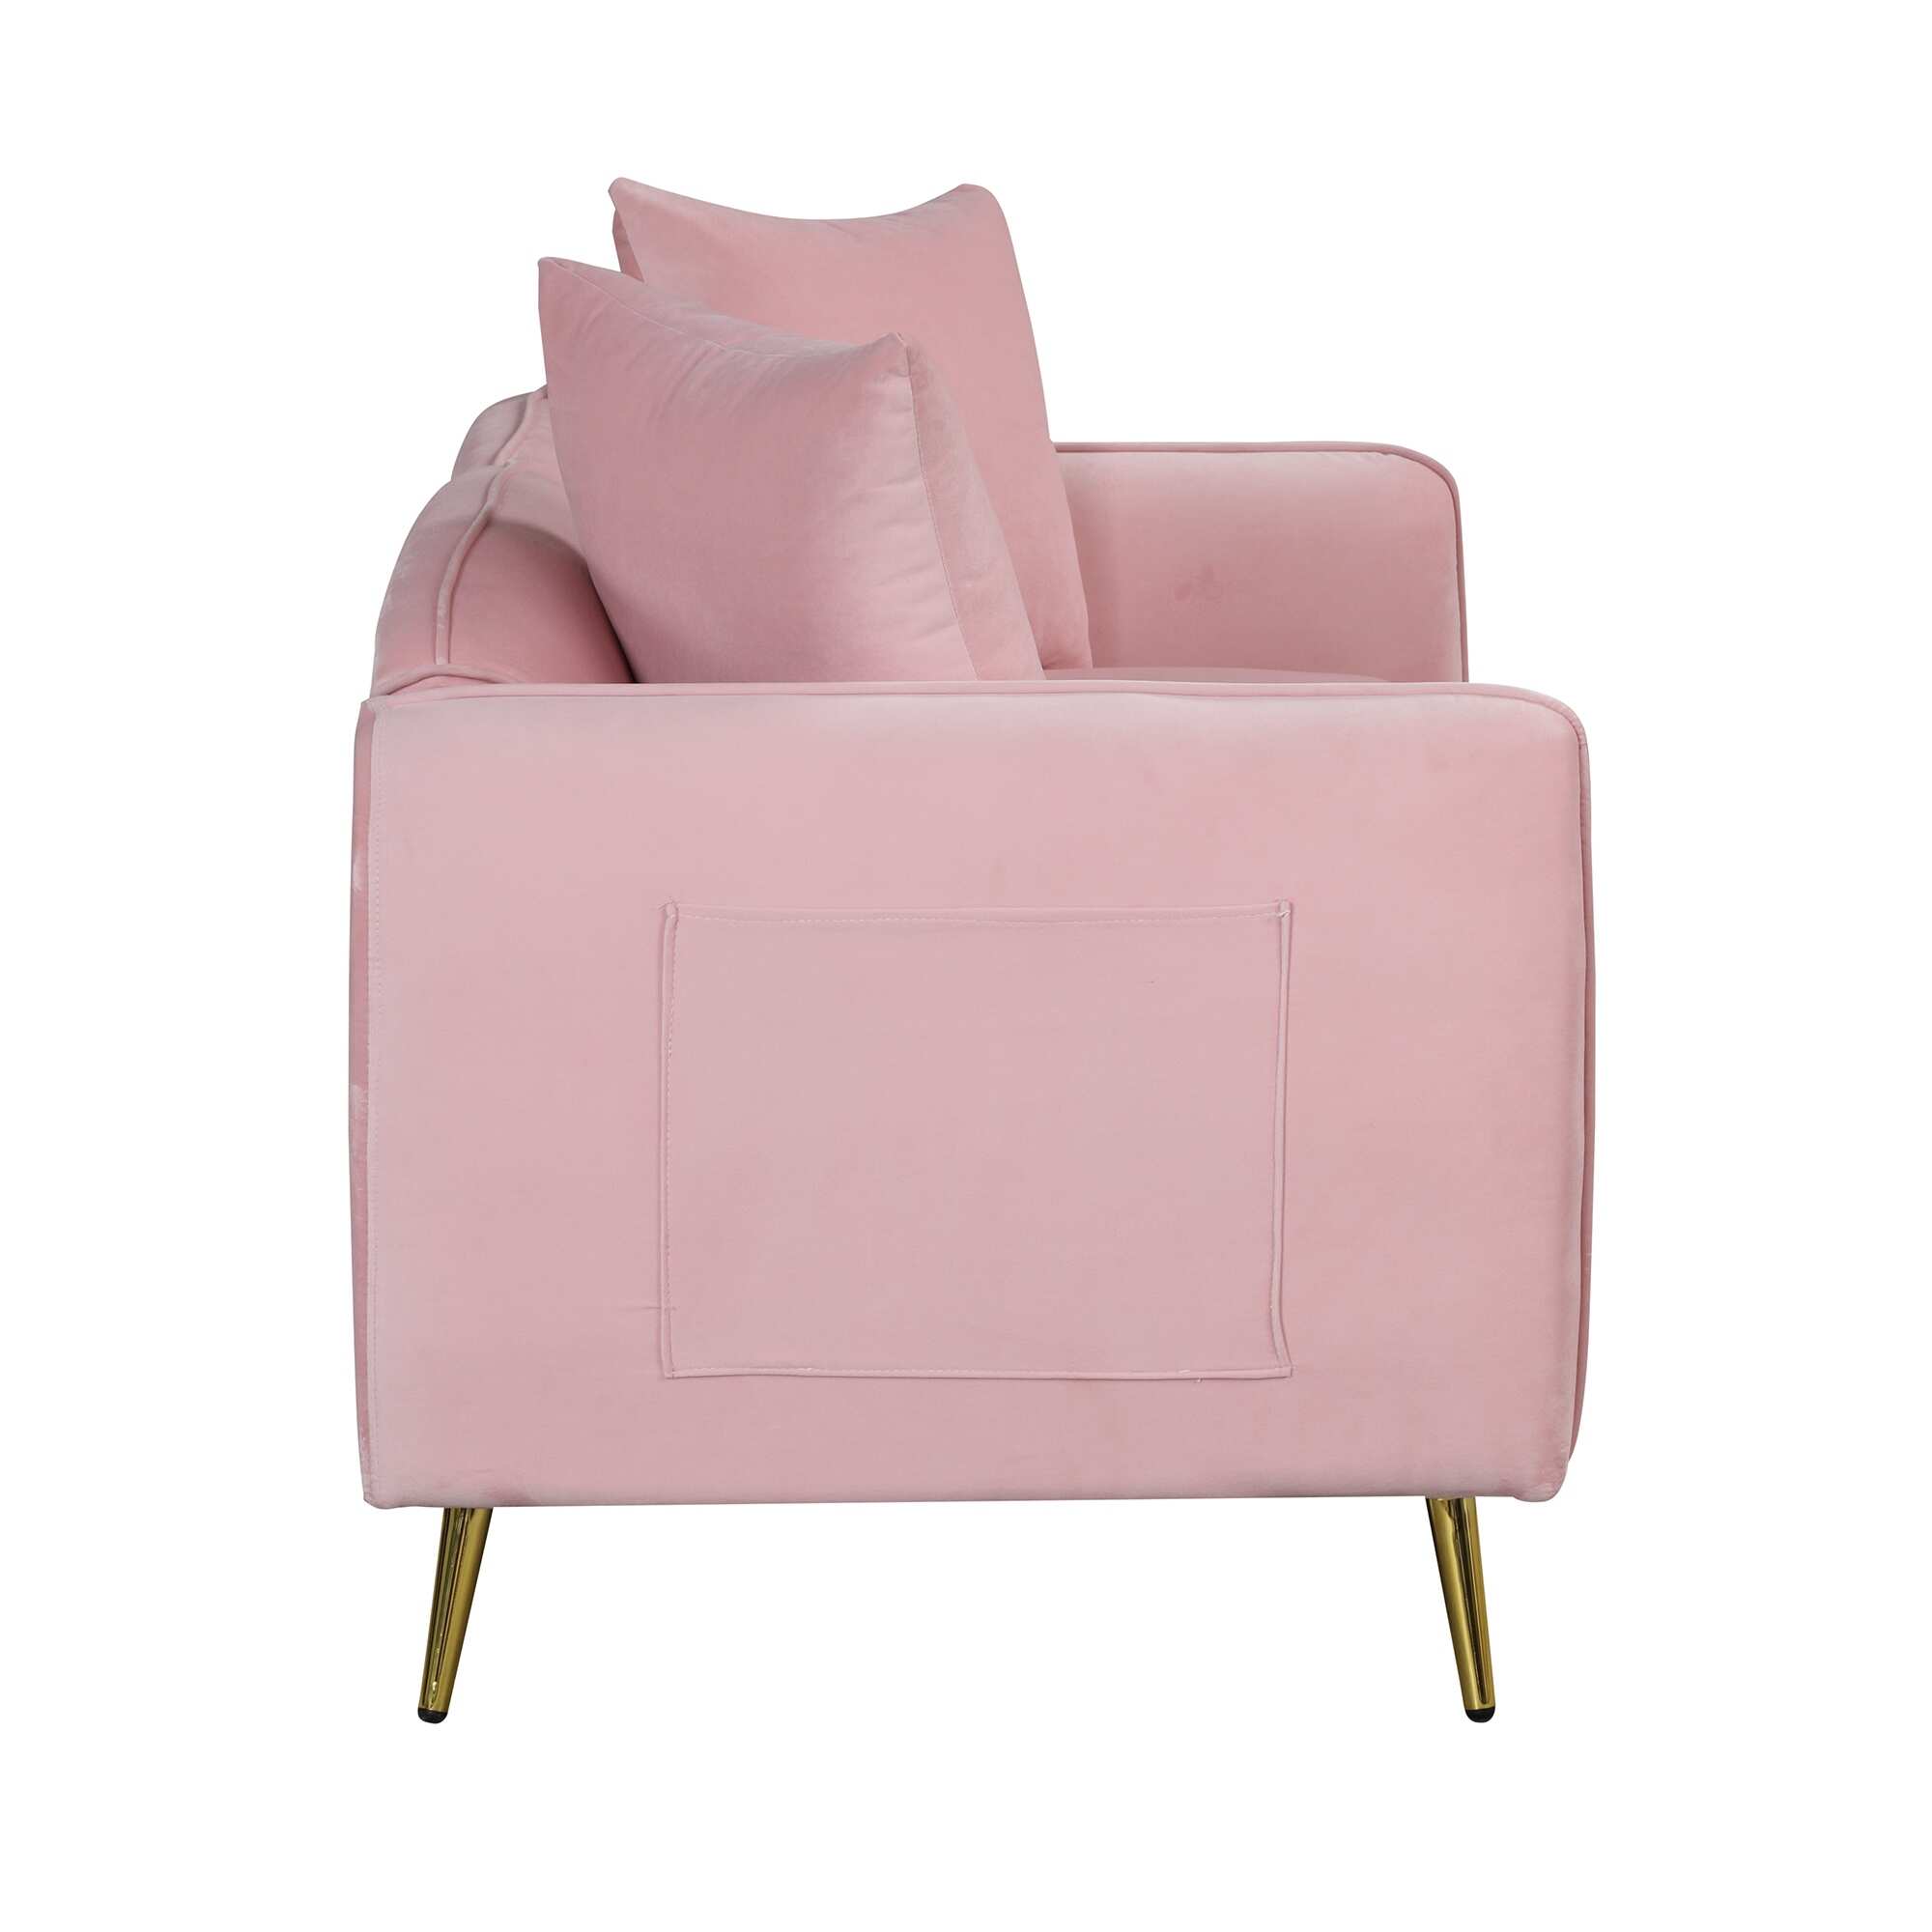 57.8" Velvet Upholstered Loveseat Sofa, Loveseat Couch with 2 Pillows and Golden Metal Legs